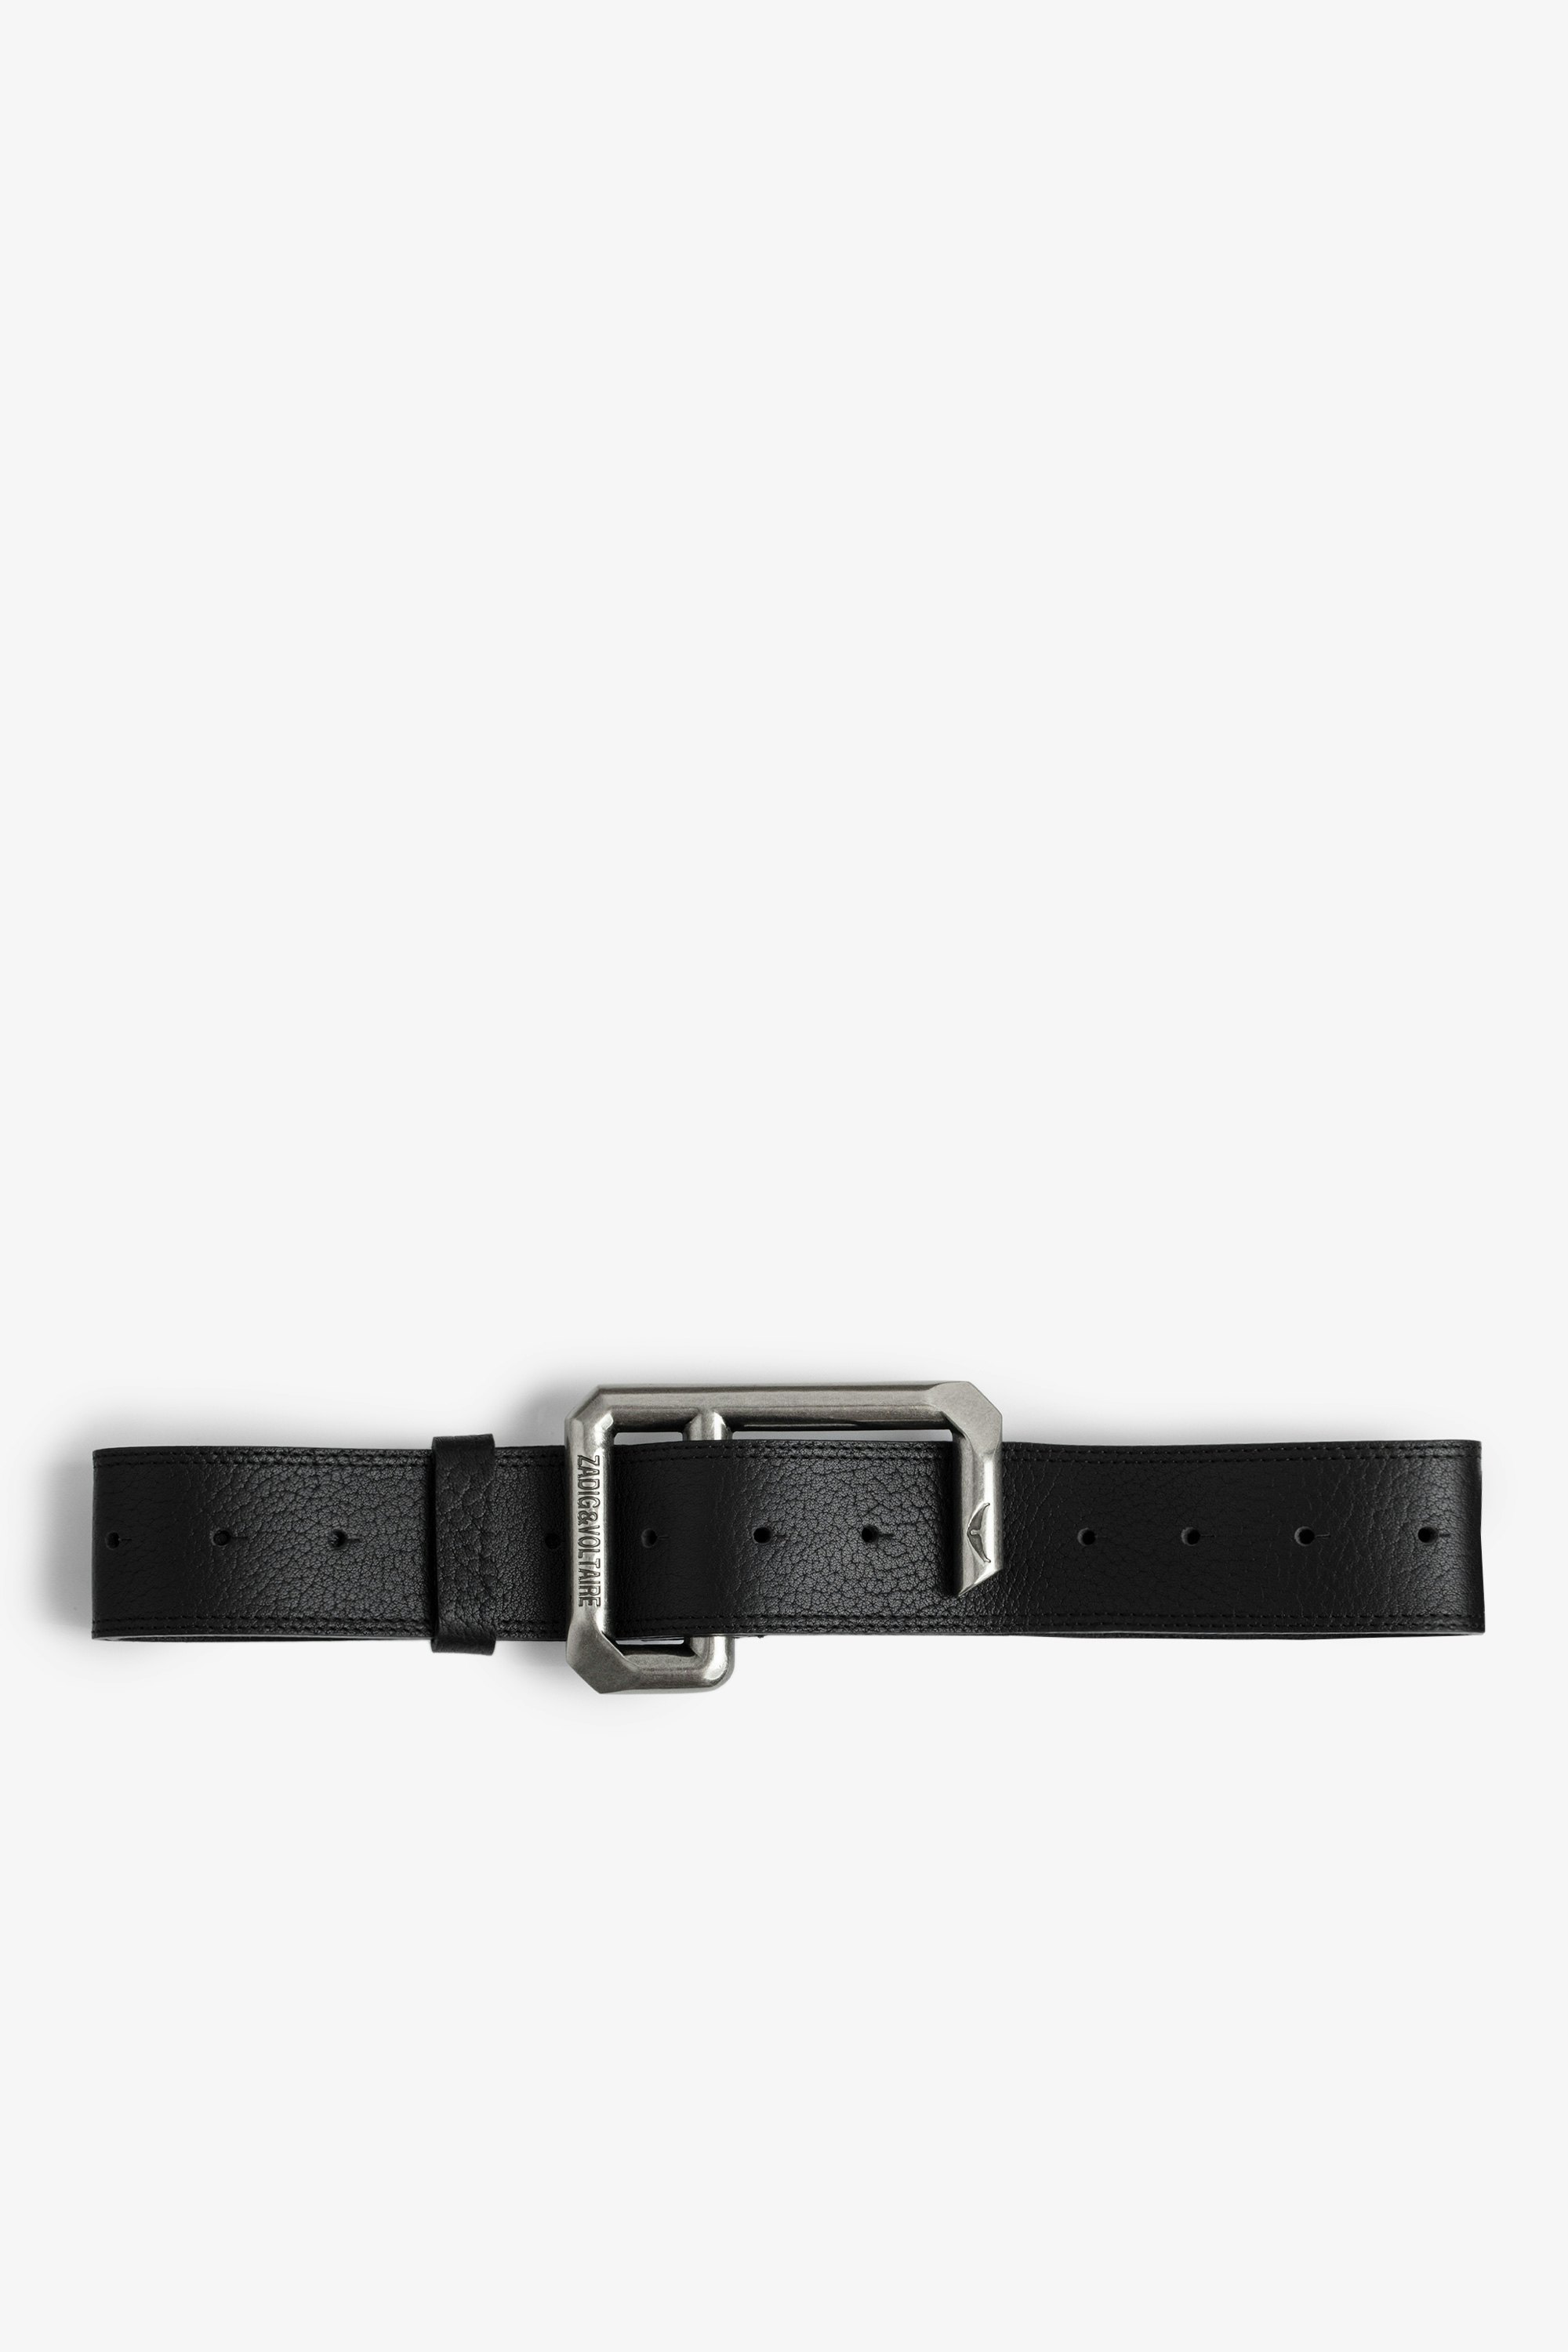 La Cecilia 50 mm Belt - Women's adjustable black leather belt with C-shaped buckle.